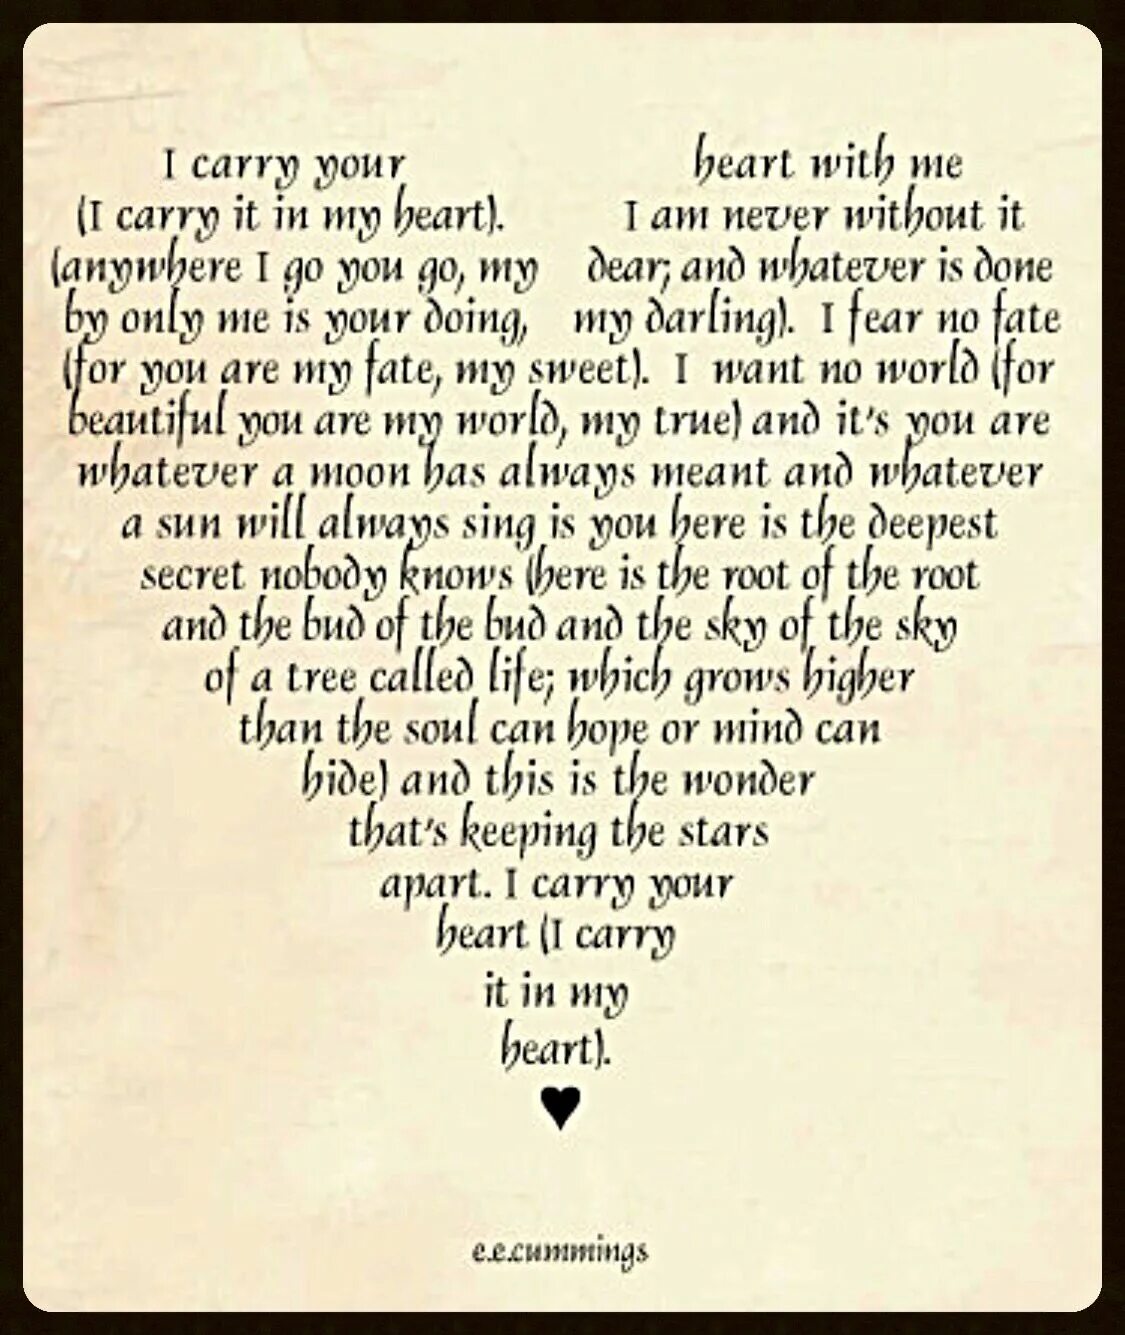 Words of your heart. I carry your Heart with me стих. Стихи Эдварда Каммингса. Каммингс стихи о любви. I carry your Heart with me poem.